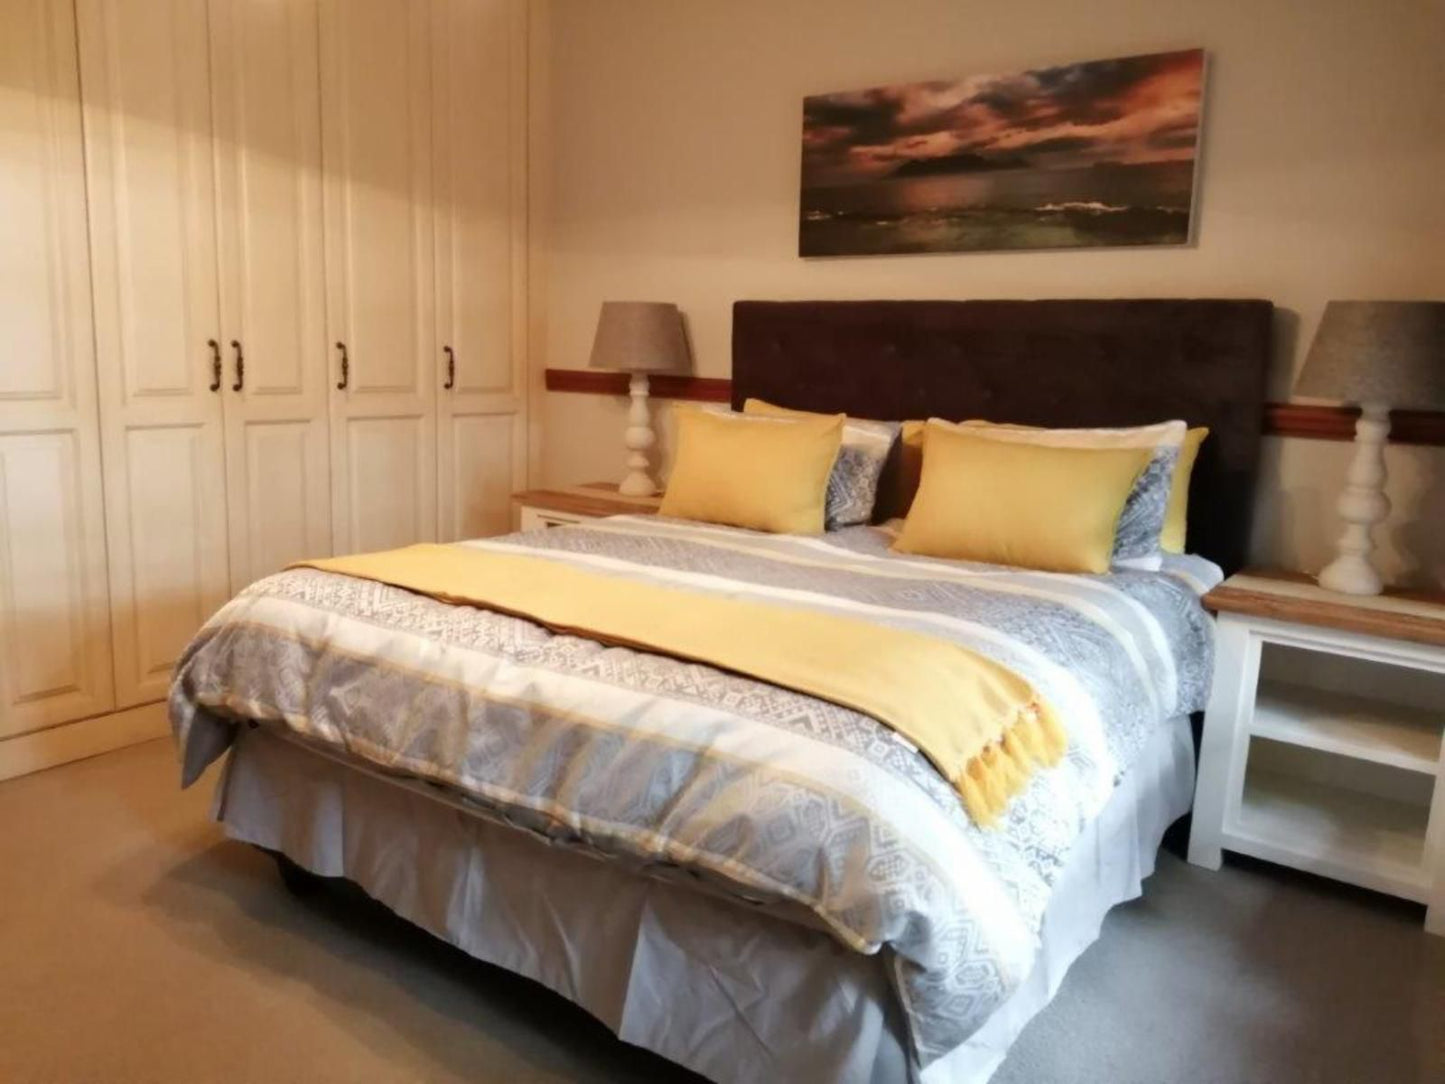 Ikamu S Lodge Verwoerd Park Johannesburg Gauteng South Africa Bedroom